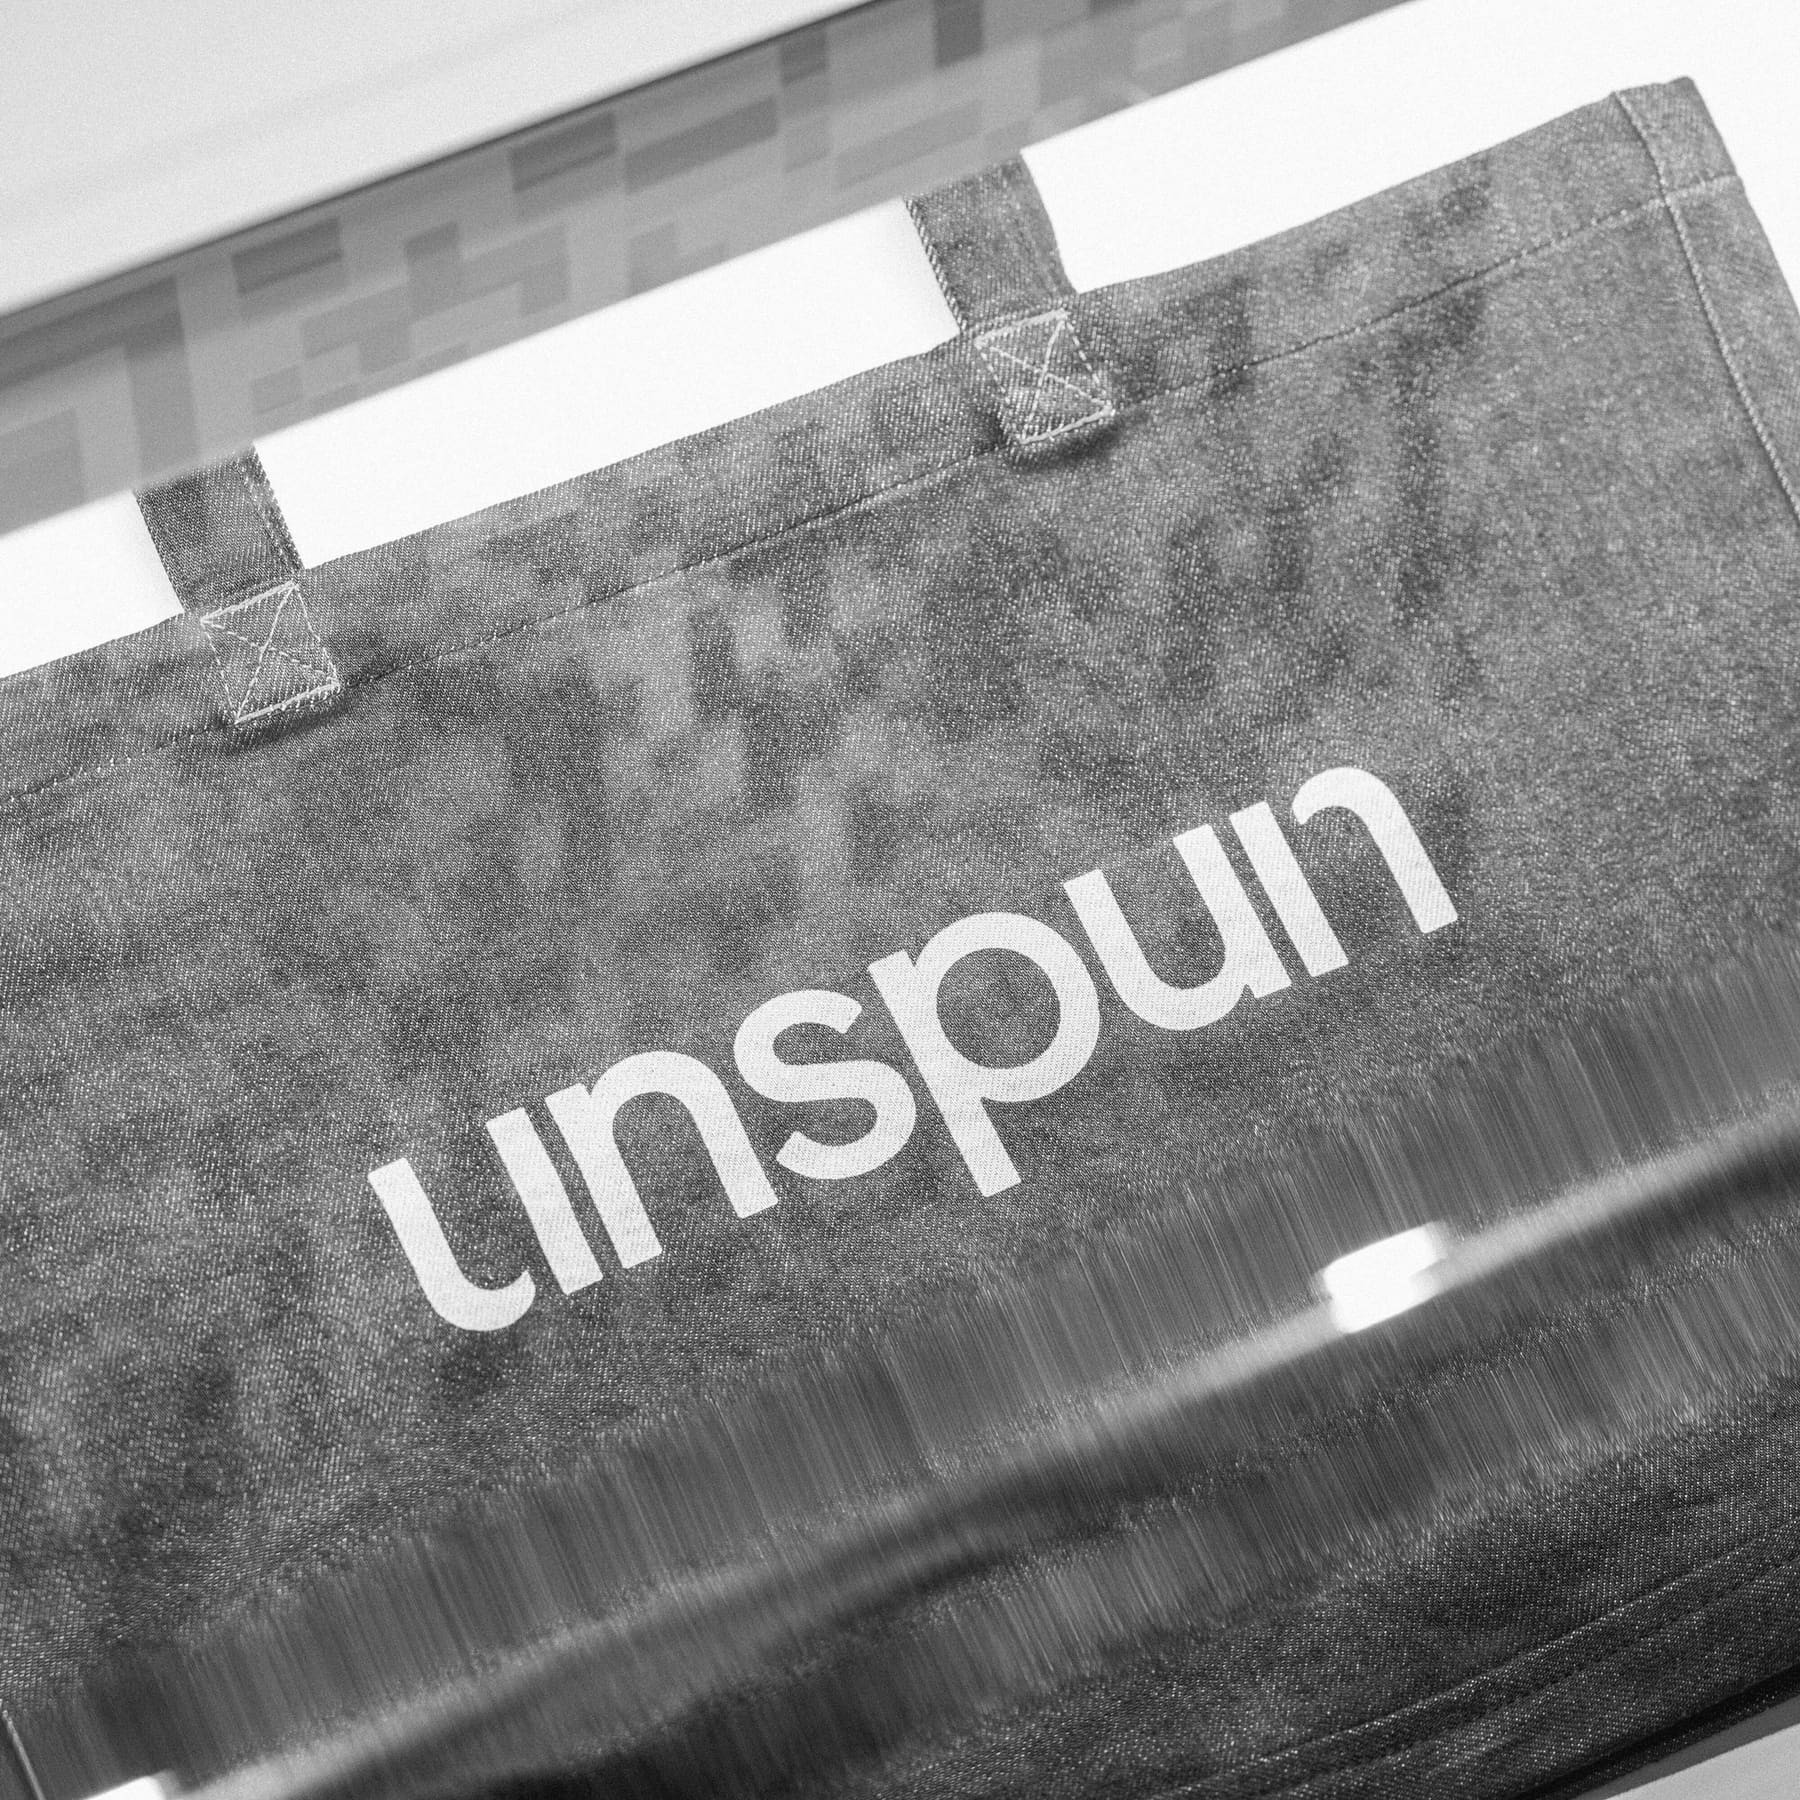 unspun logo printed on bag in black and white